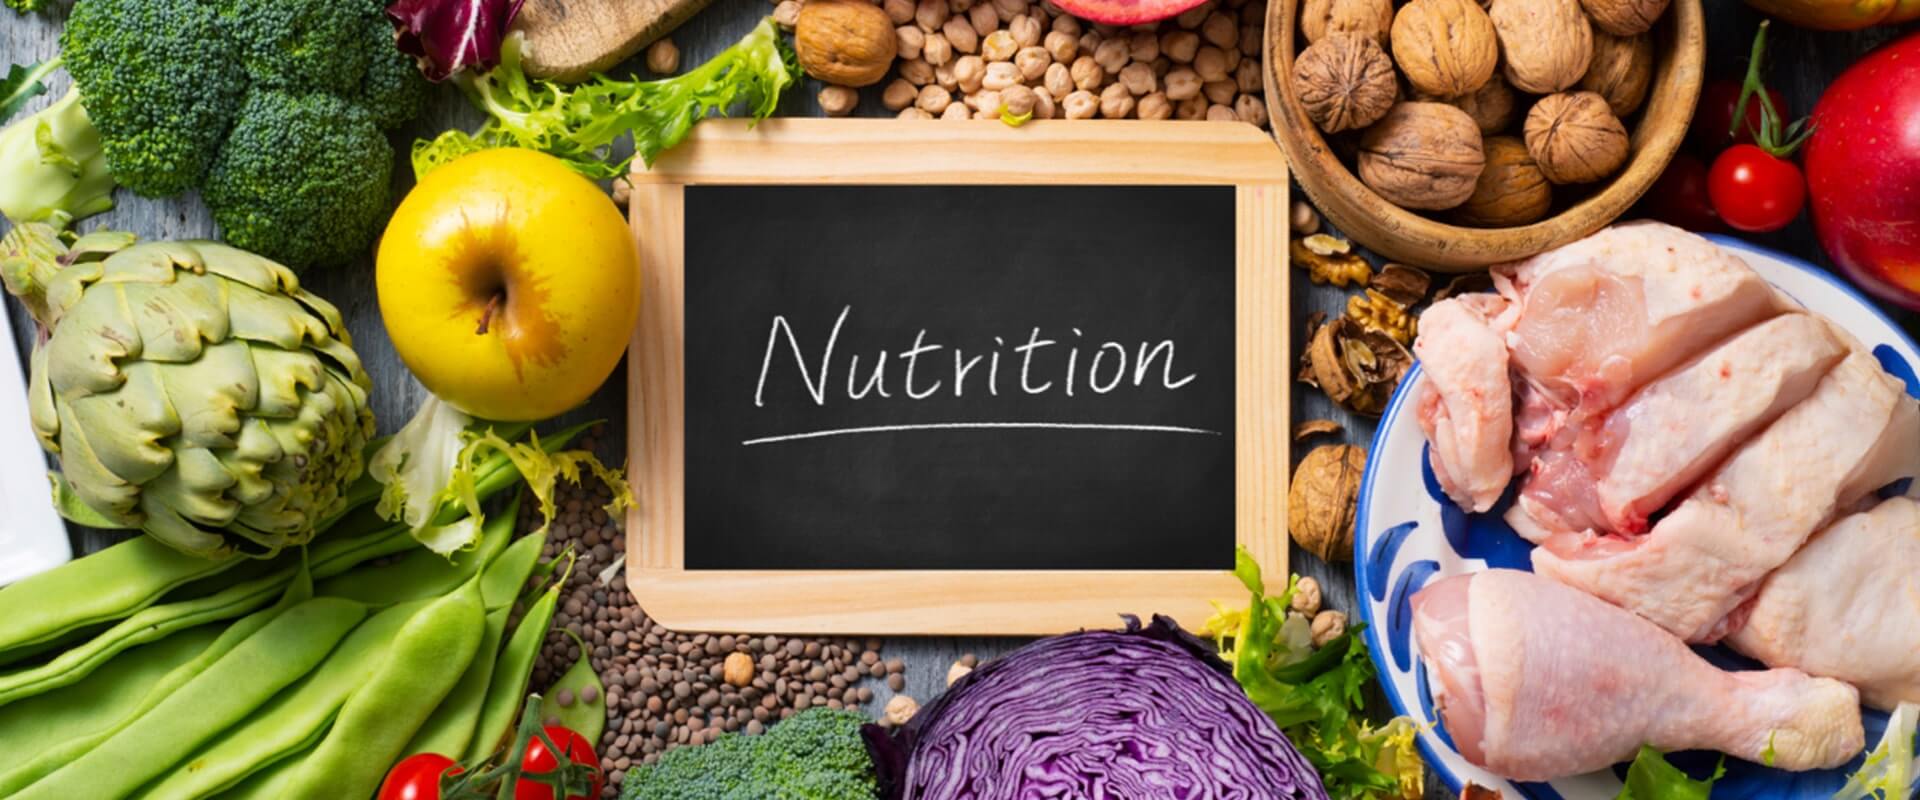 banner_nutrition_macronutrition-min